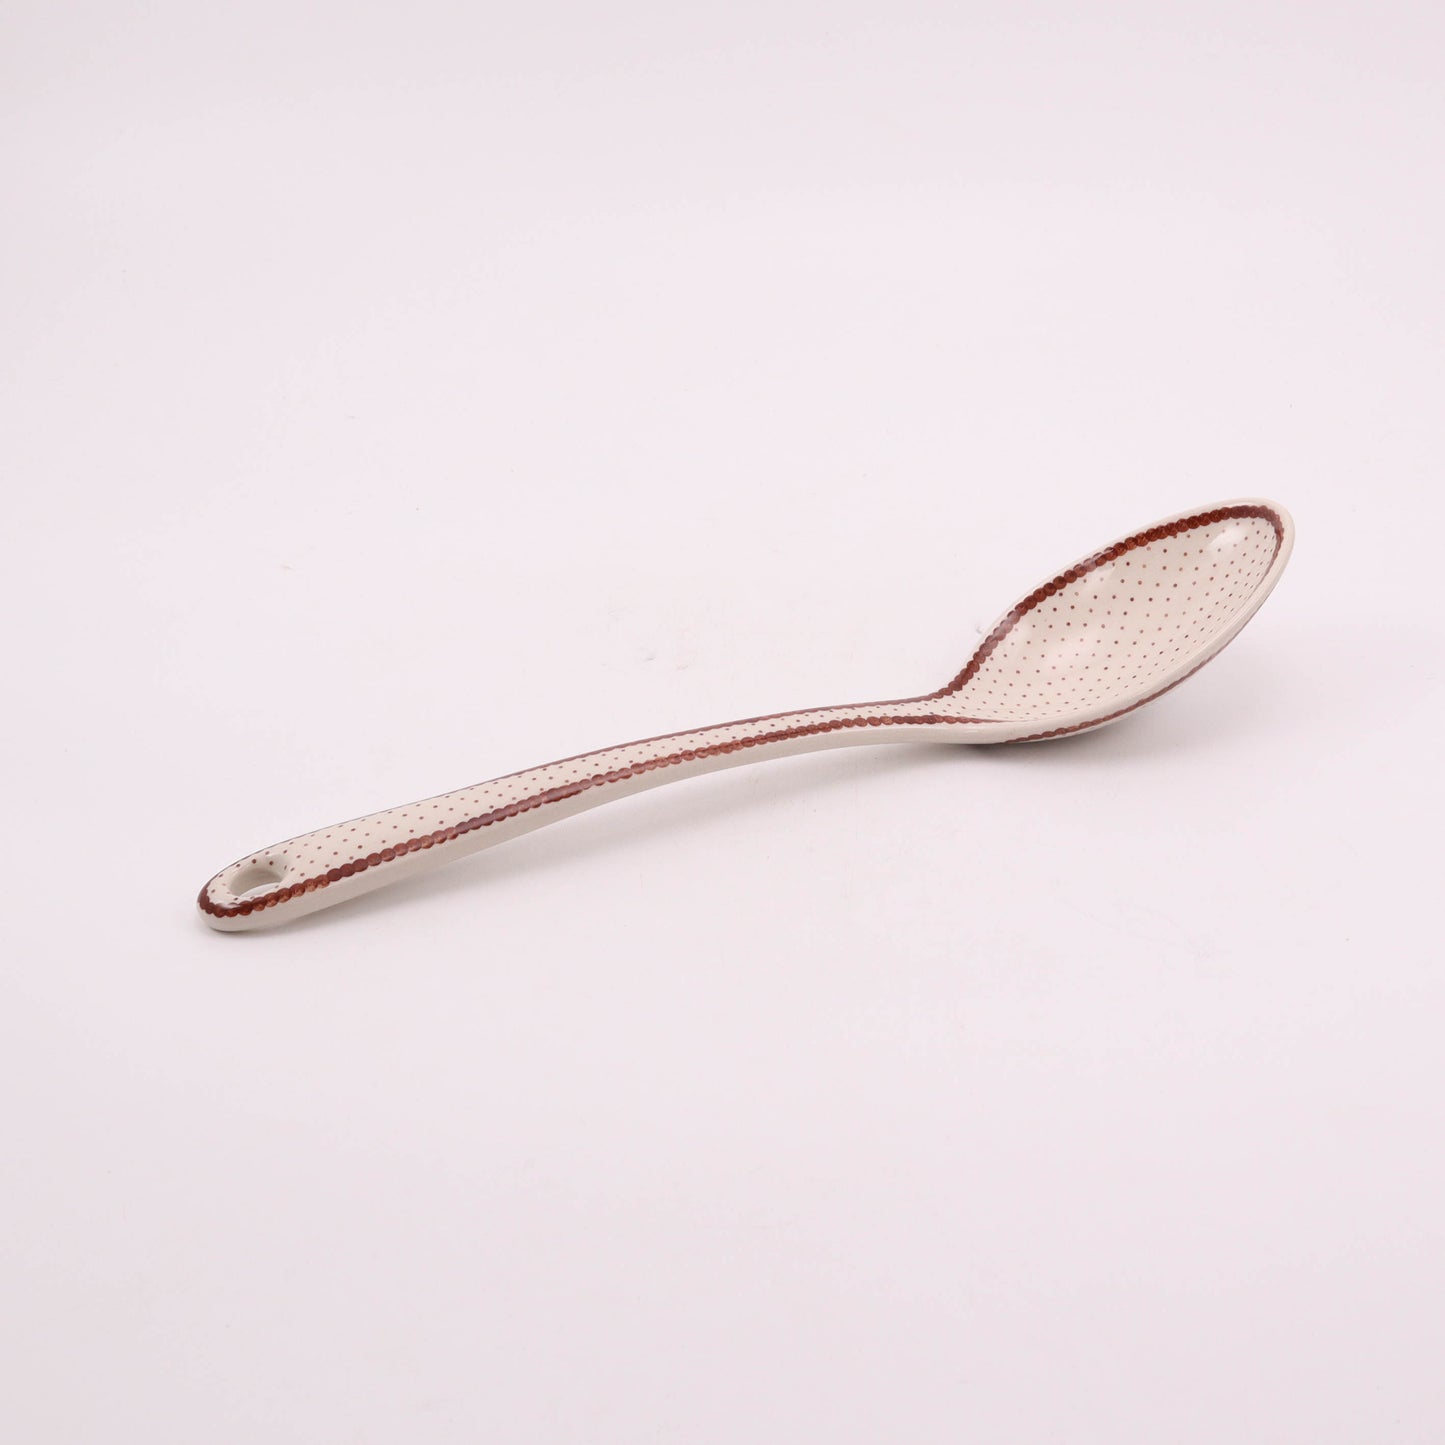 12" Serving Spoon. Pattern: Gingerbread